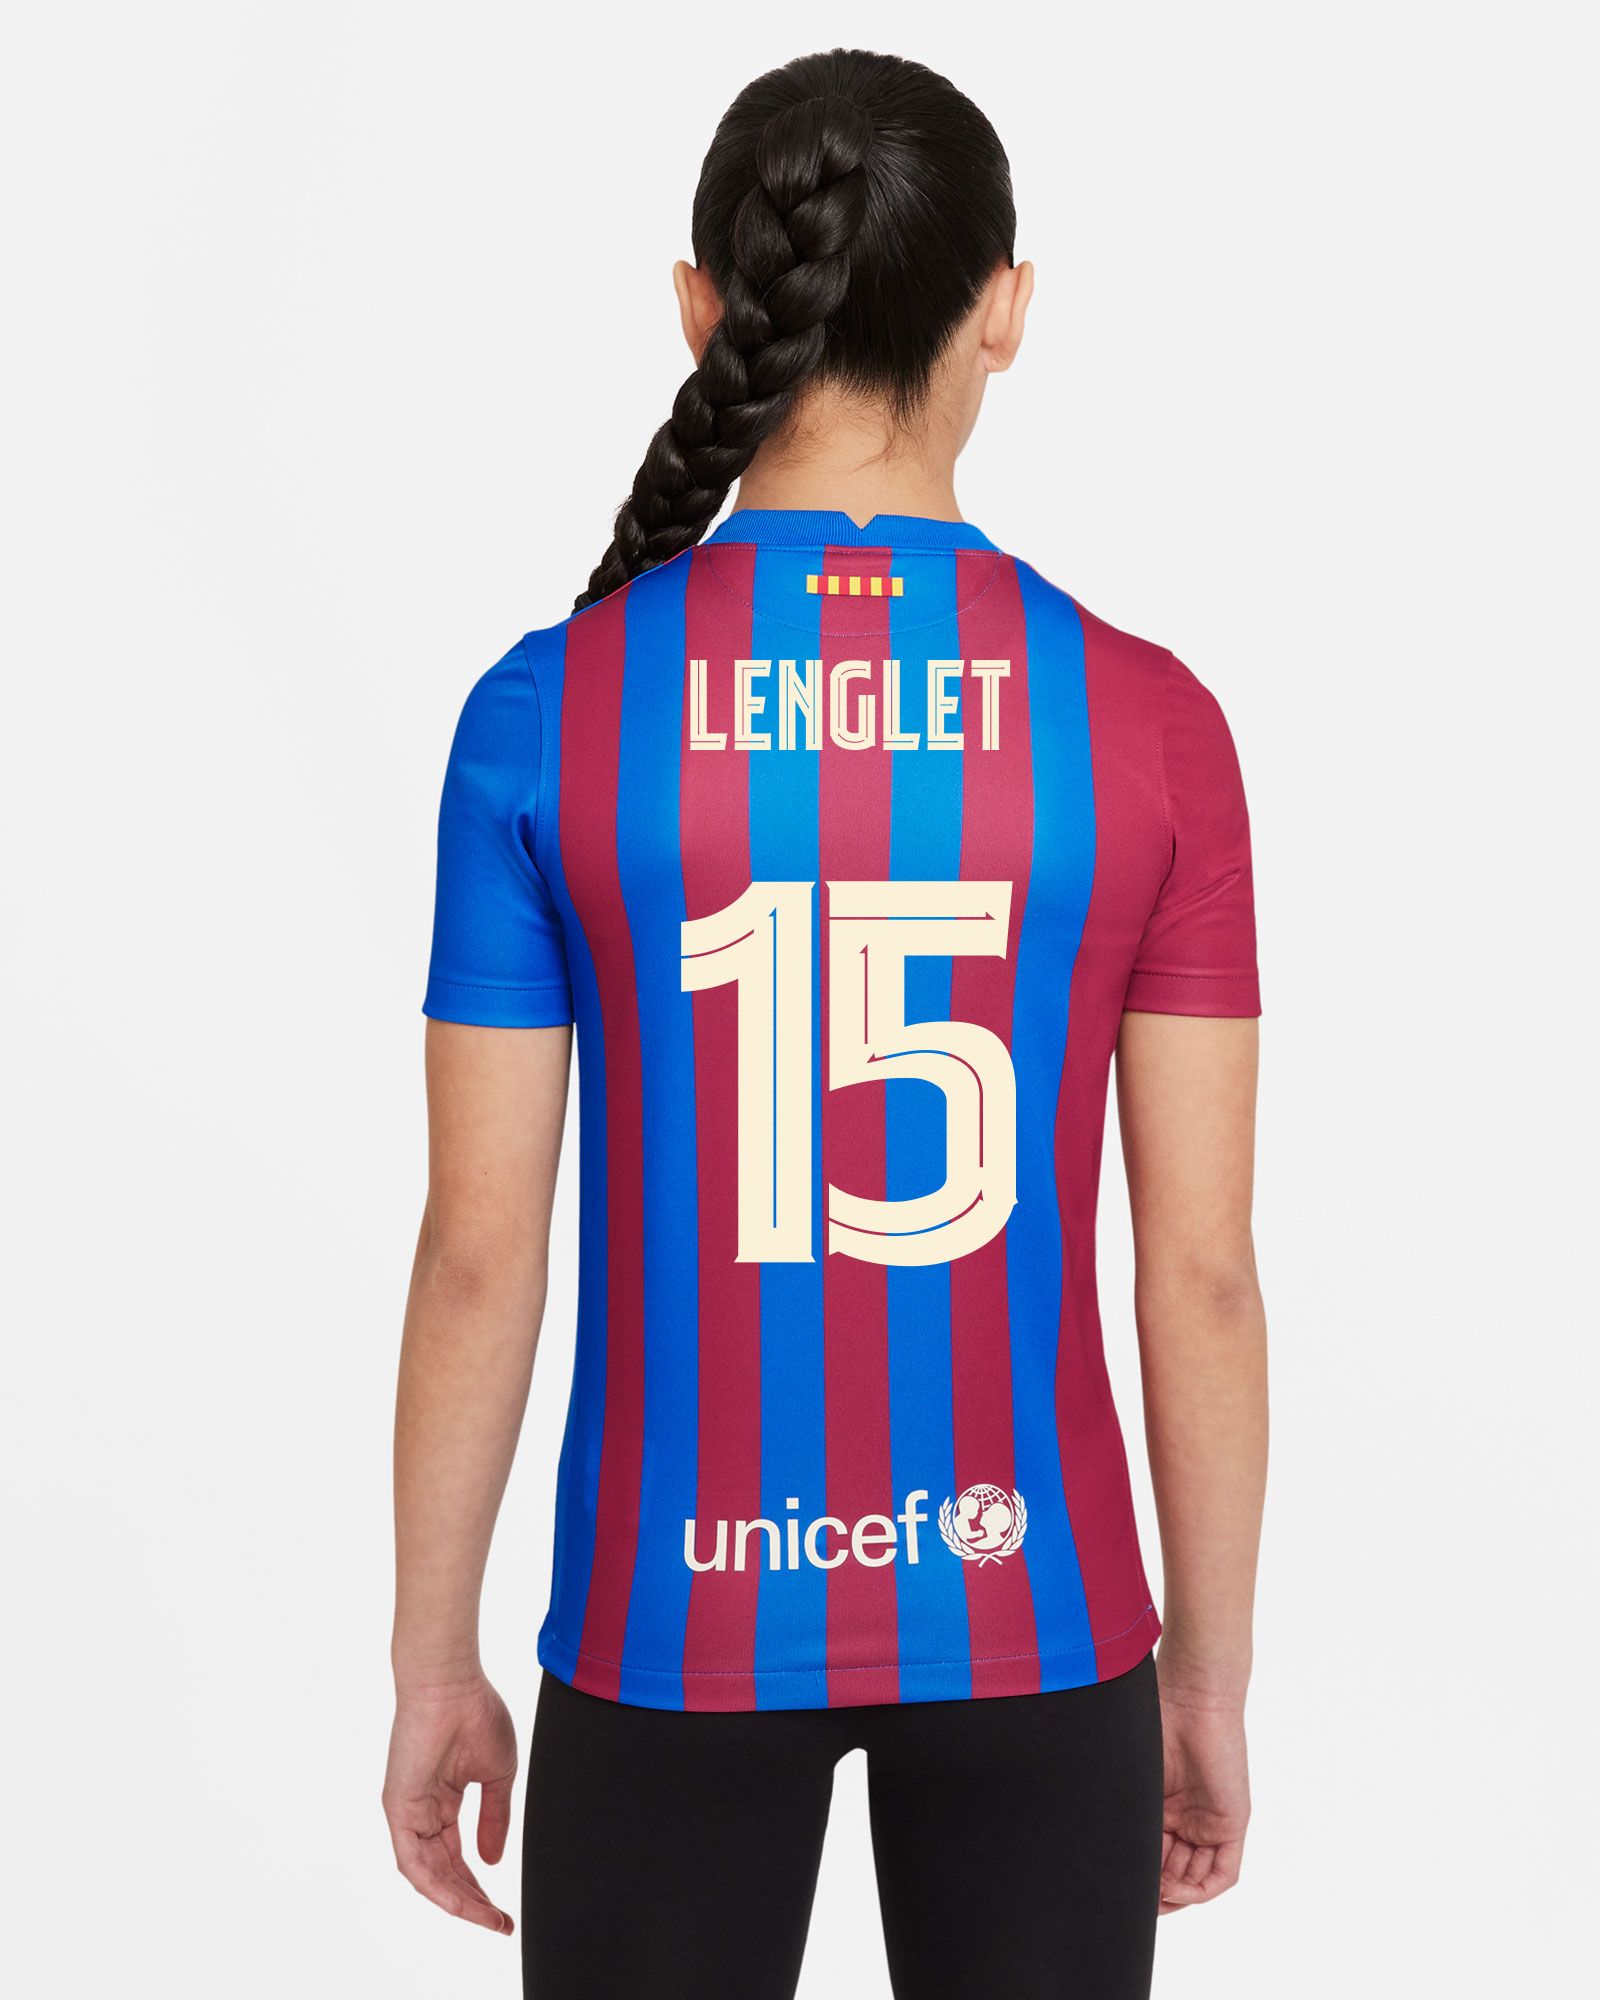 Camiseta 1ª FC Barcelona 2021/2022 Lenglet - Fútbol Factory